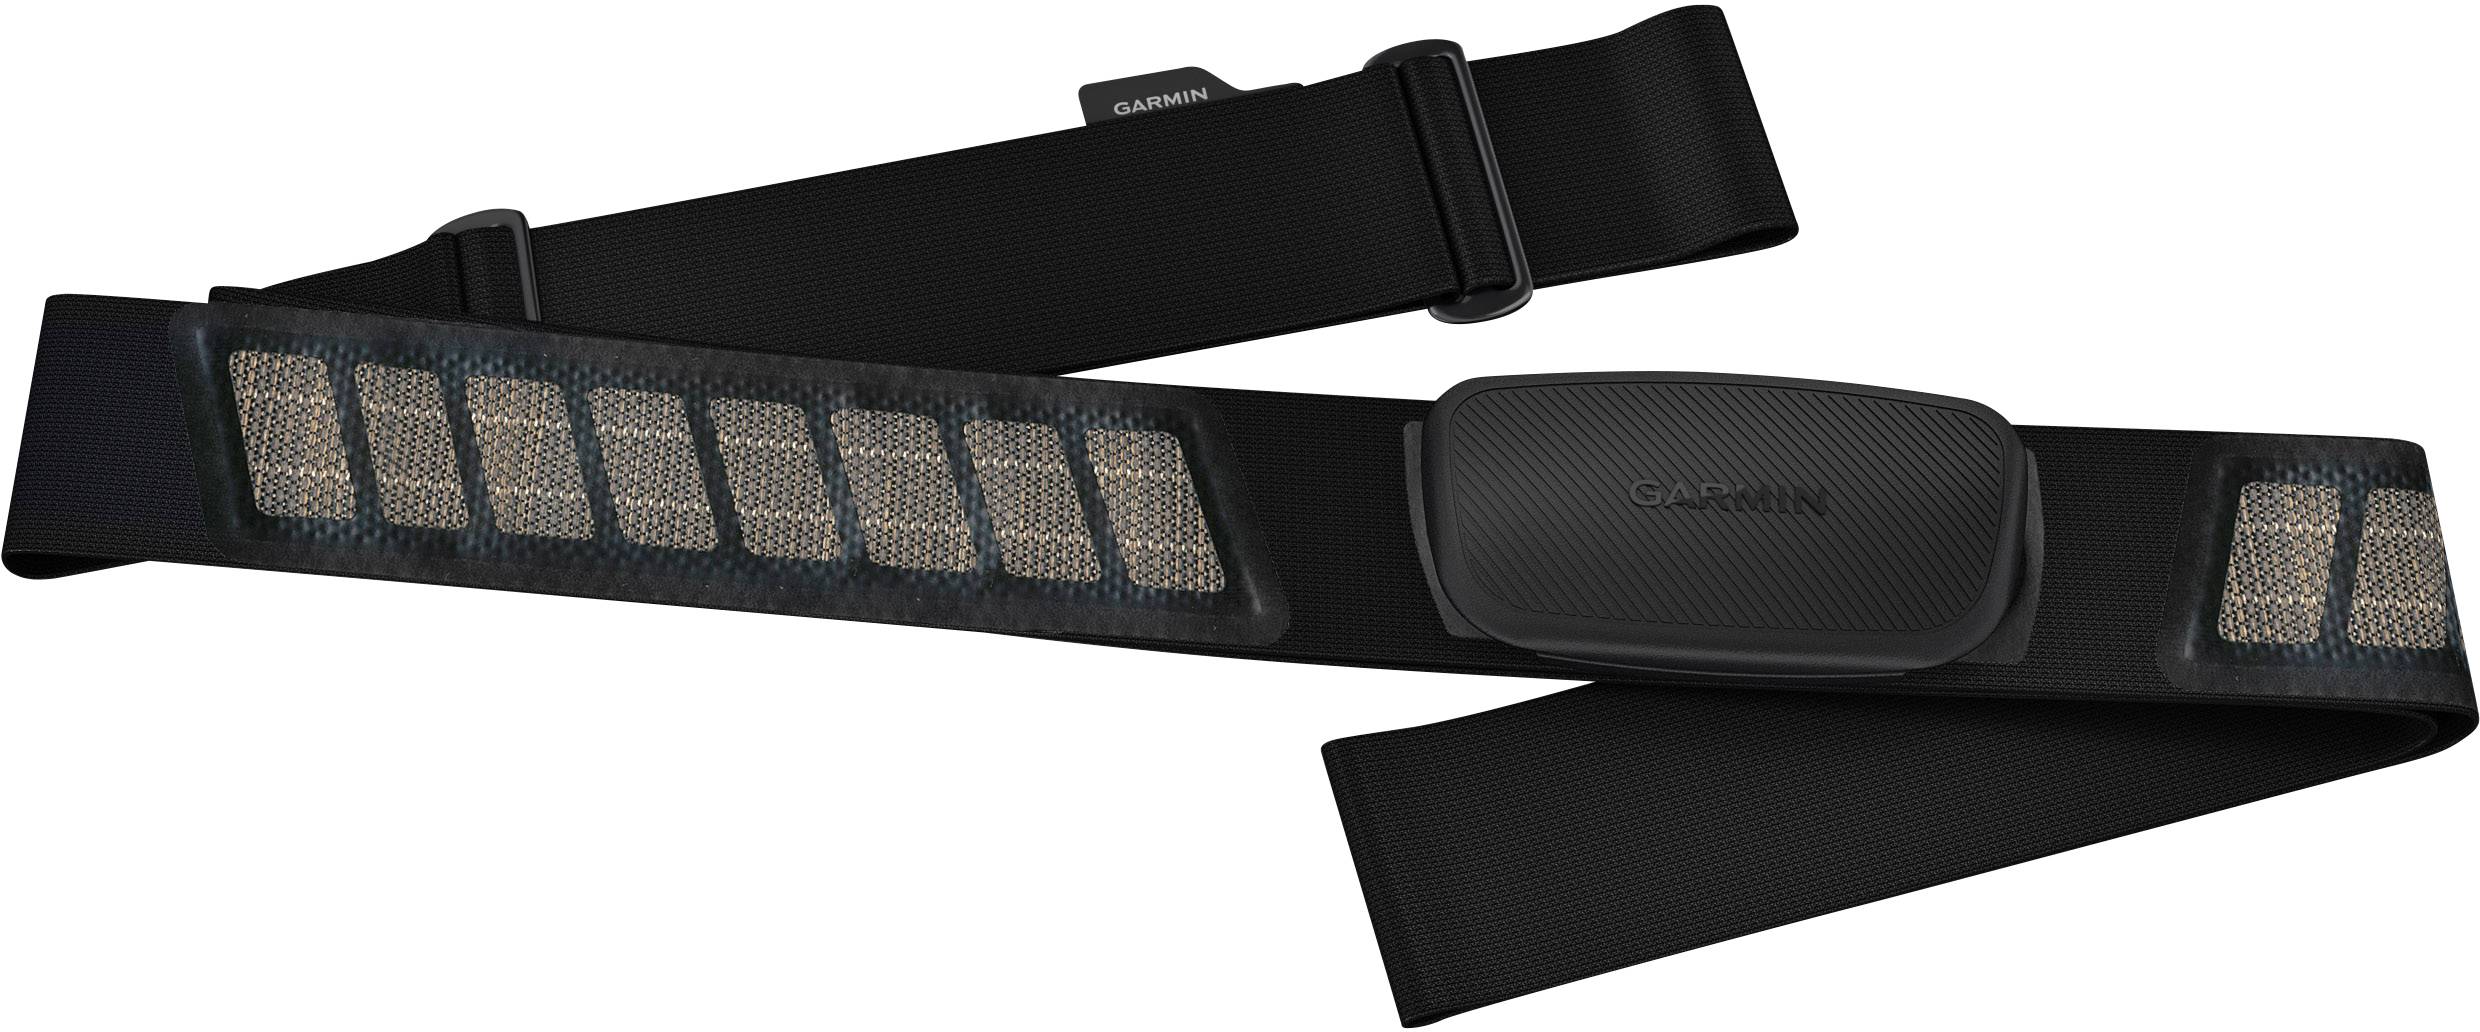 Garmin HRM-Dual Fitness with heart rate monitor Black/grey | Conrad.com